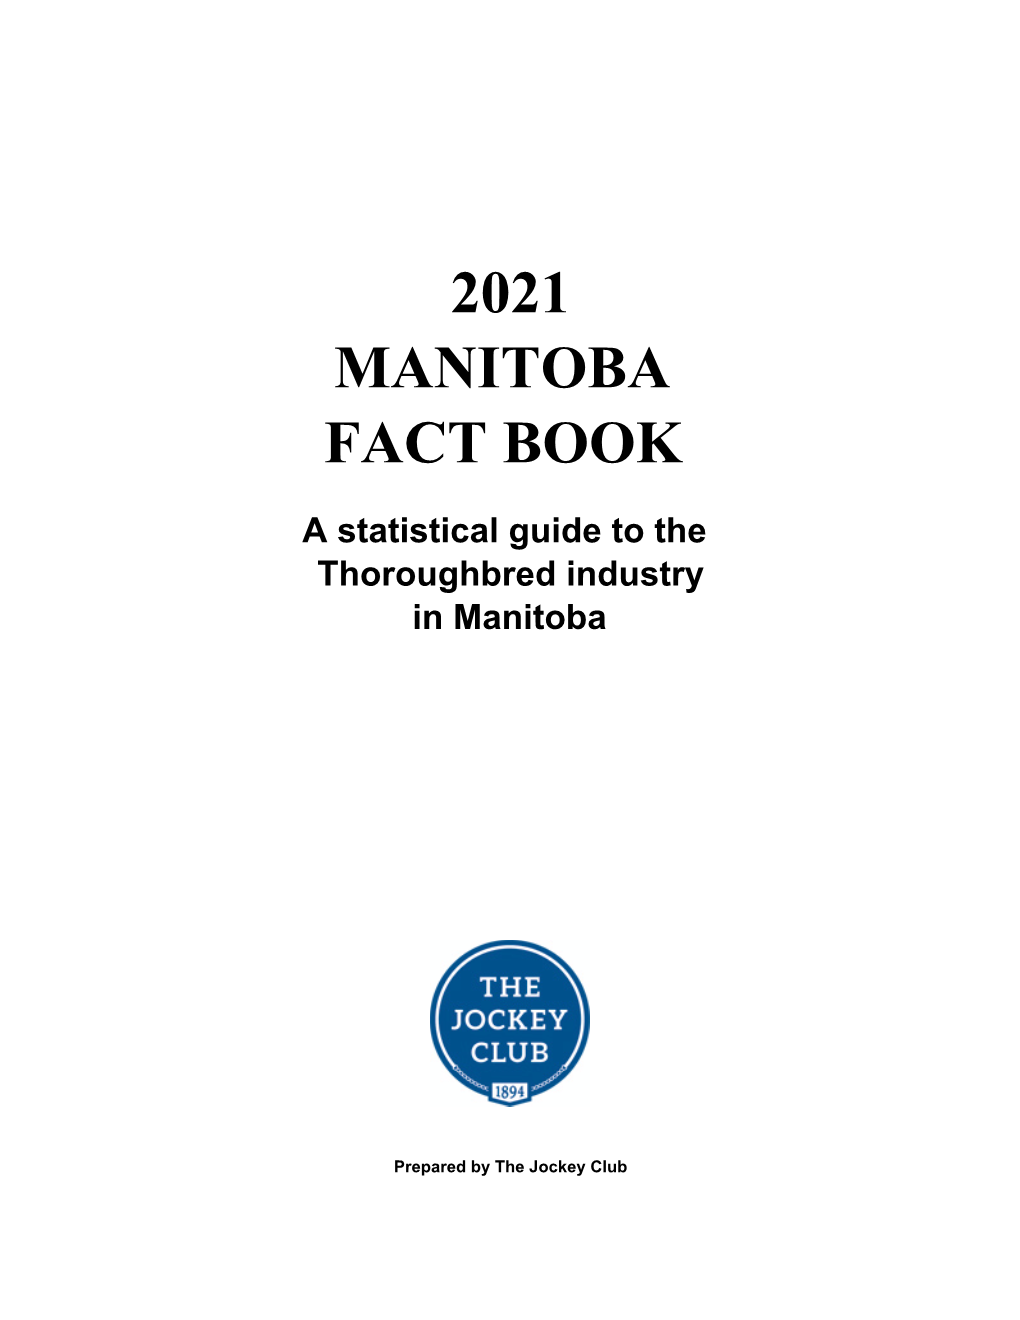 Manitoba Fact Book